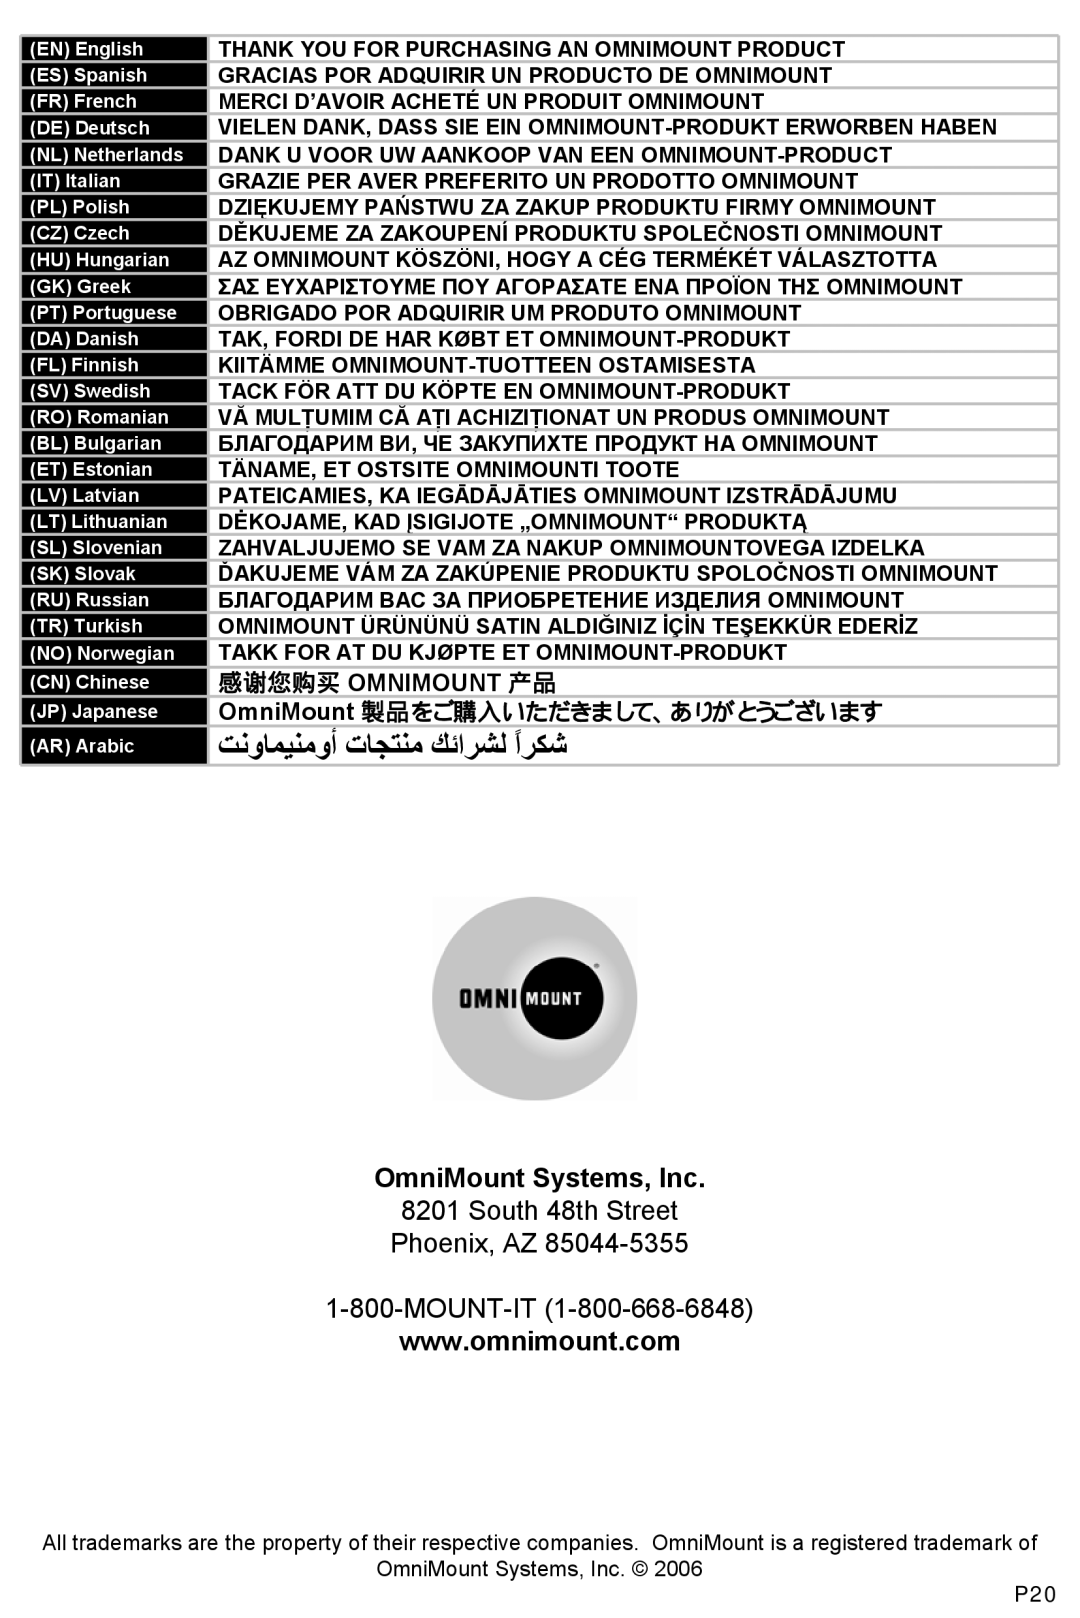 Omnimount ECHO50 OmniMount Systems, Inc, ﺖﻧوﺎﻤﻴﻨﻣوأ تﺎﺠﺘﻨﻣ ﻚﺋاﺮﺸﻟ اﺮﻜﺷً, South 48th Street Phoenix, AZ 1-800-MOUNT-IT 